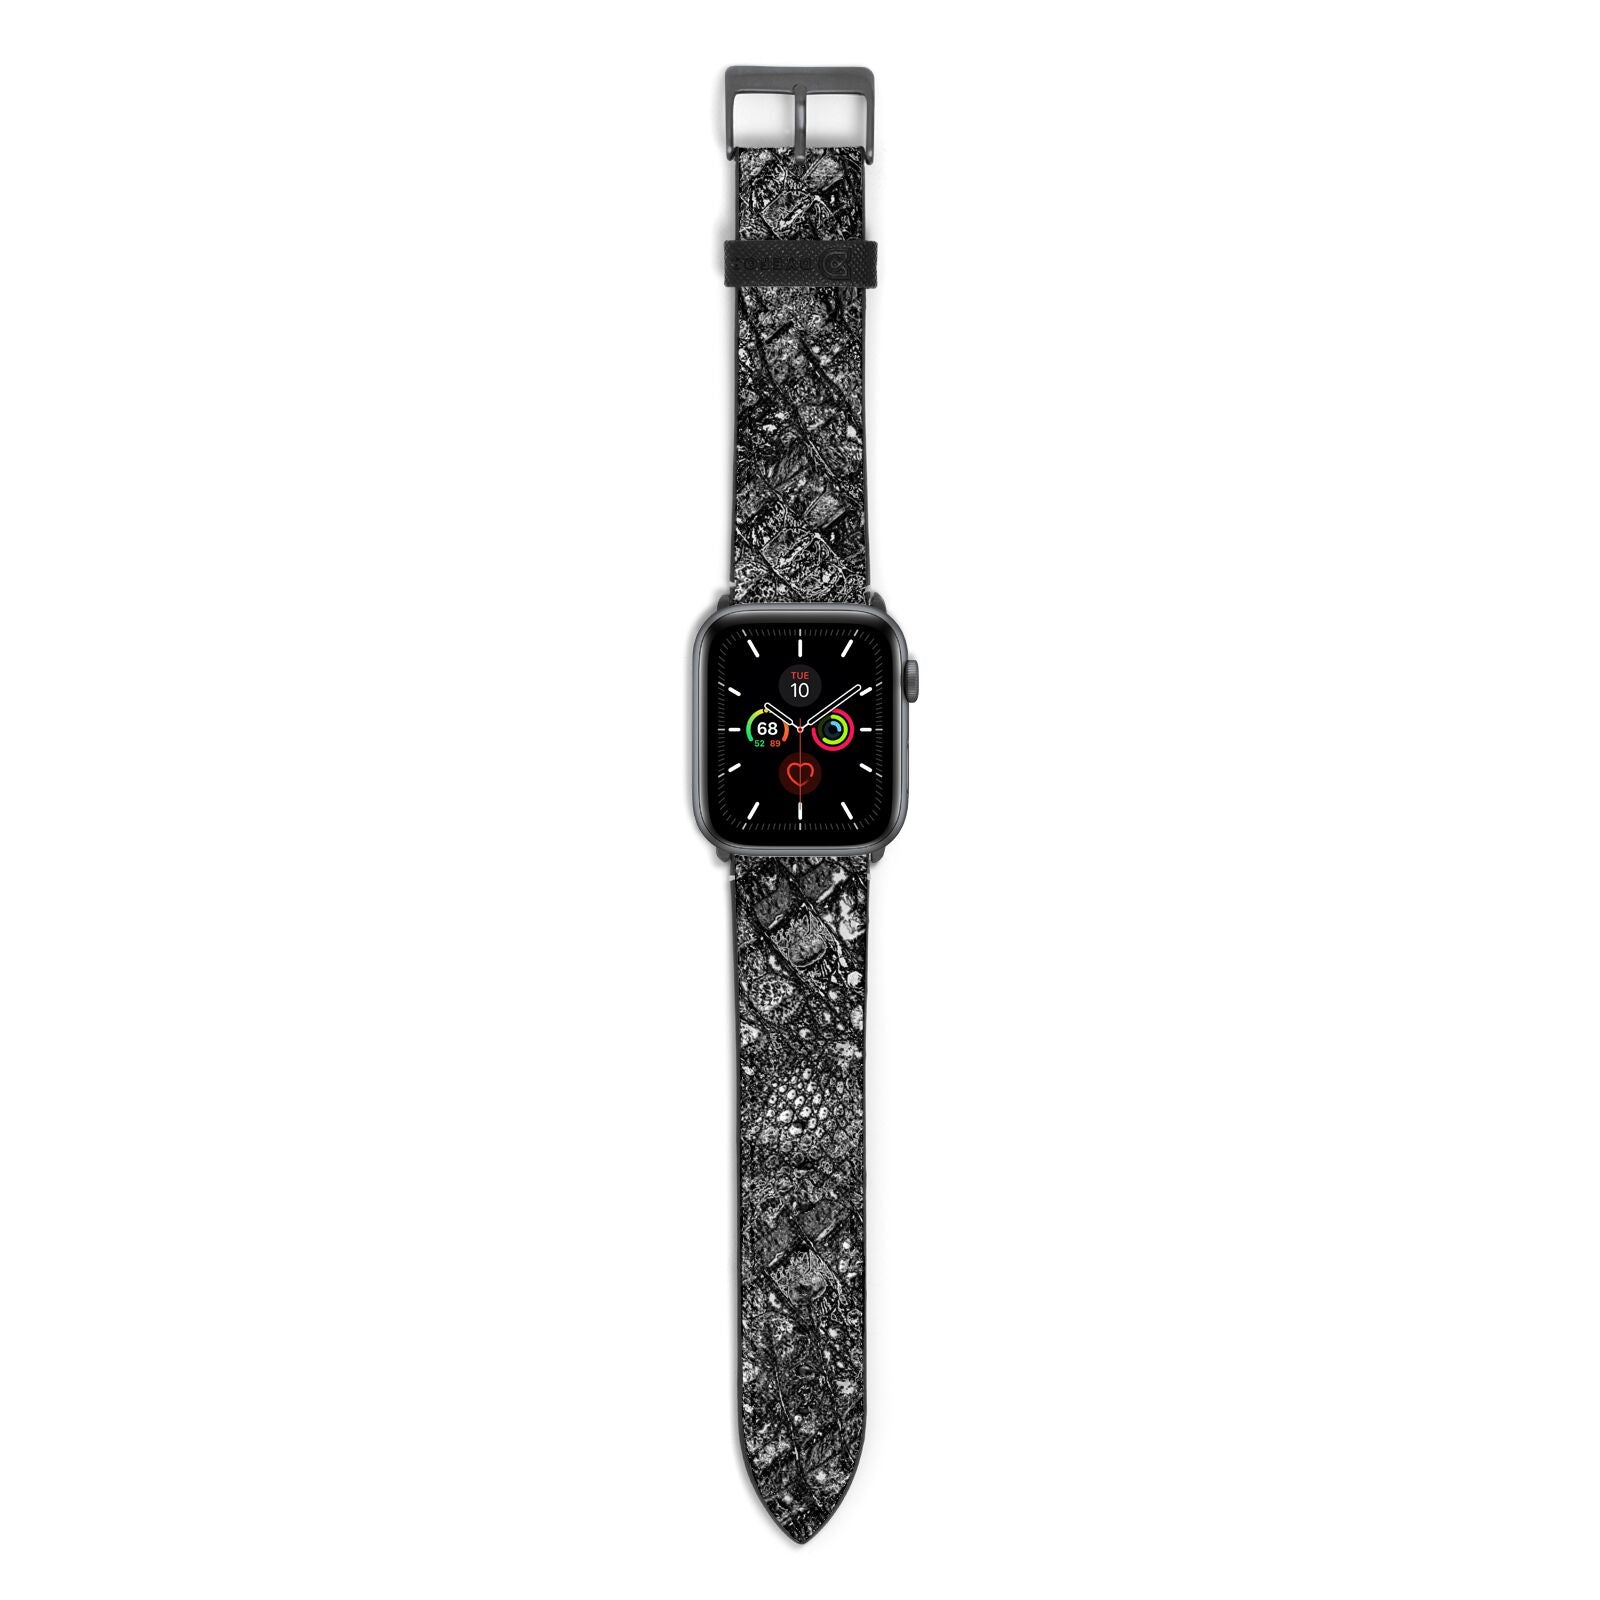 Snakeskin Design Apple Watch Strap with Space Grey Hardware